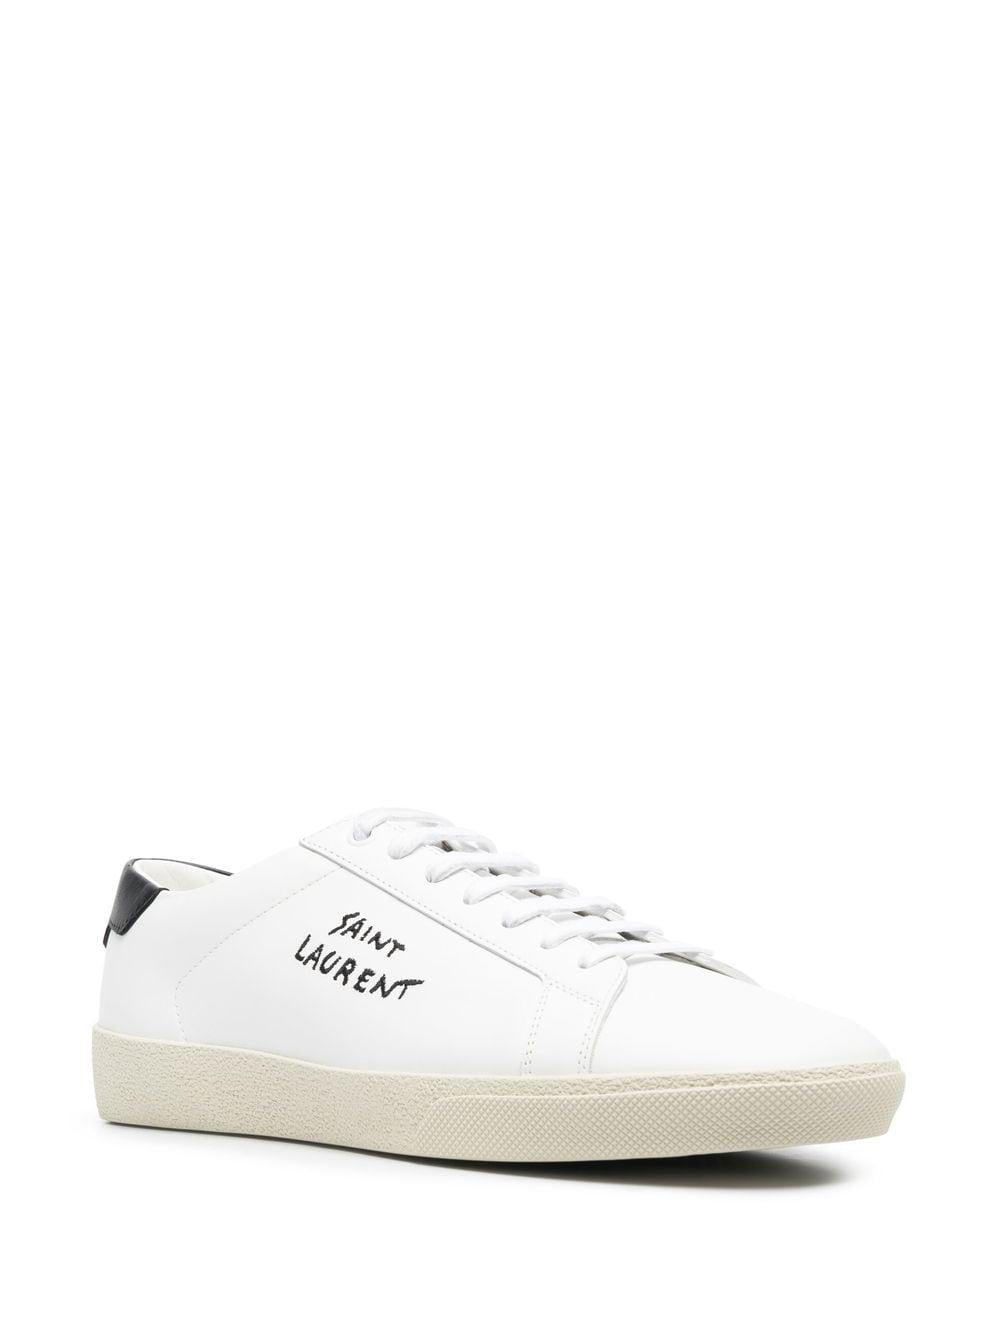 男士白色帆布鞋 - Saint Laurent字样，橡胶底